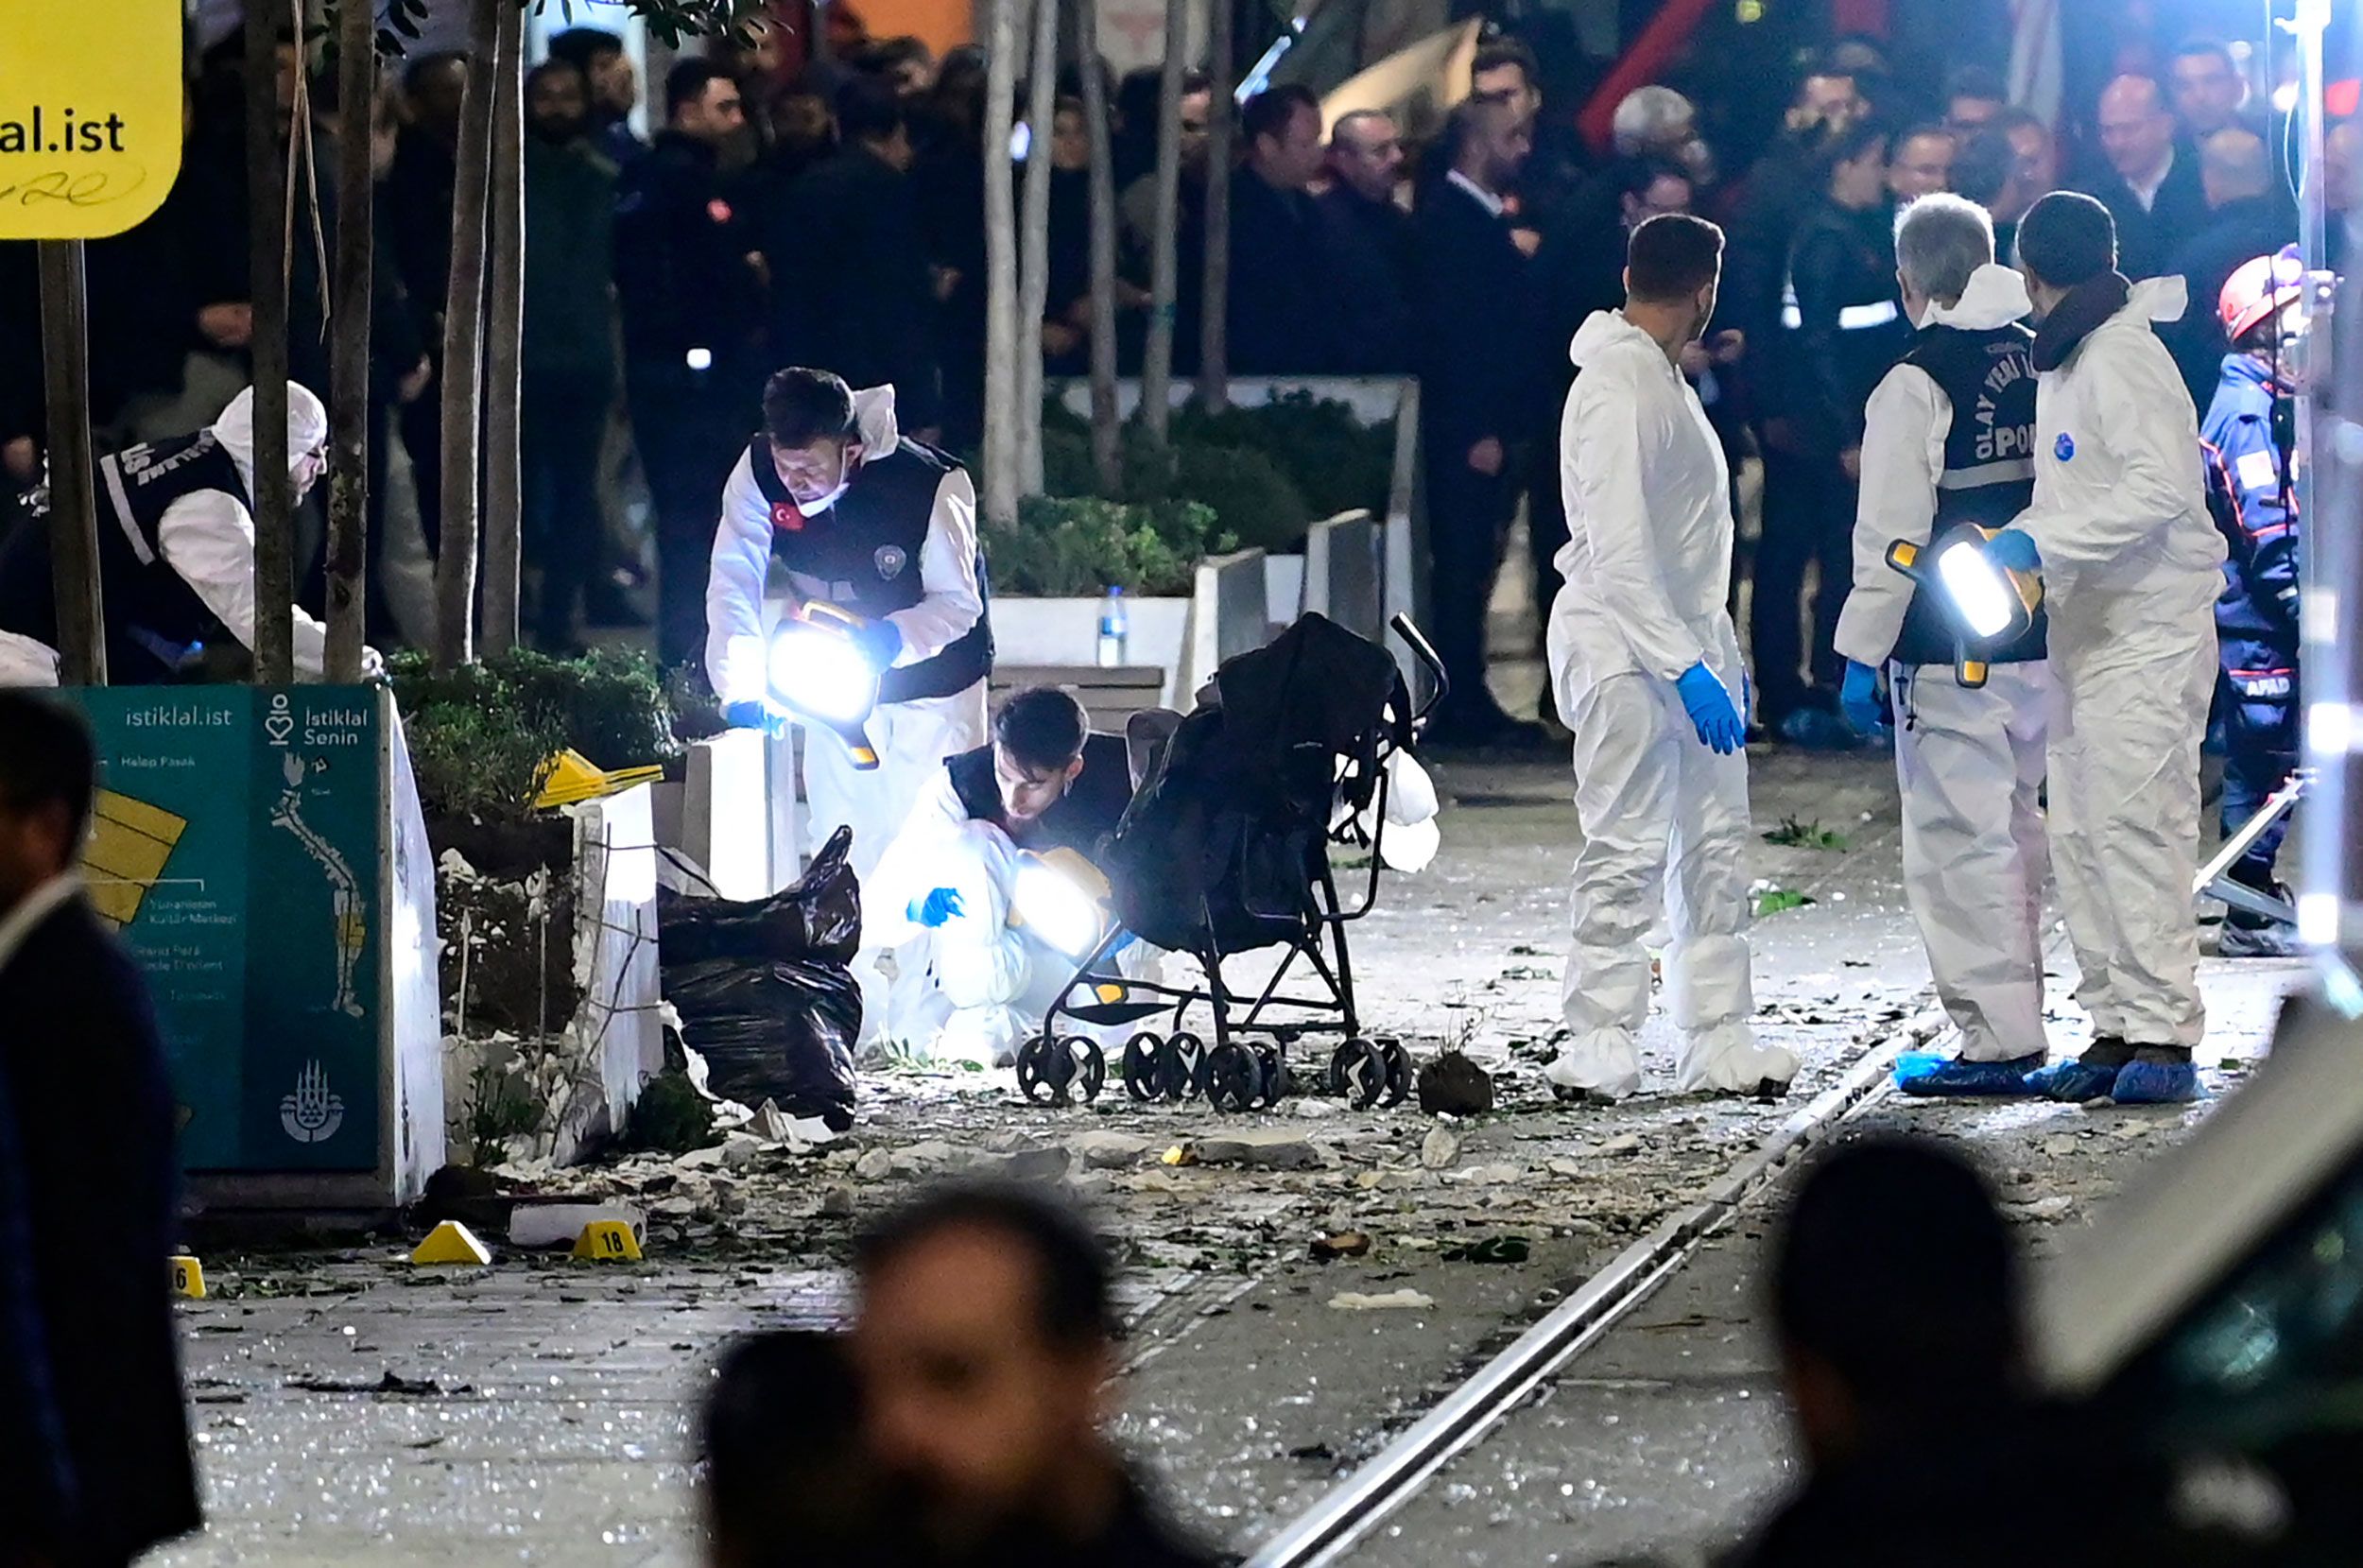 İstiklal Caddesi saldırısı davasında üç tahliye daha